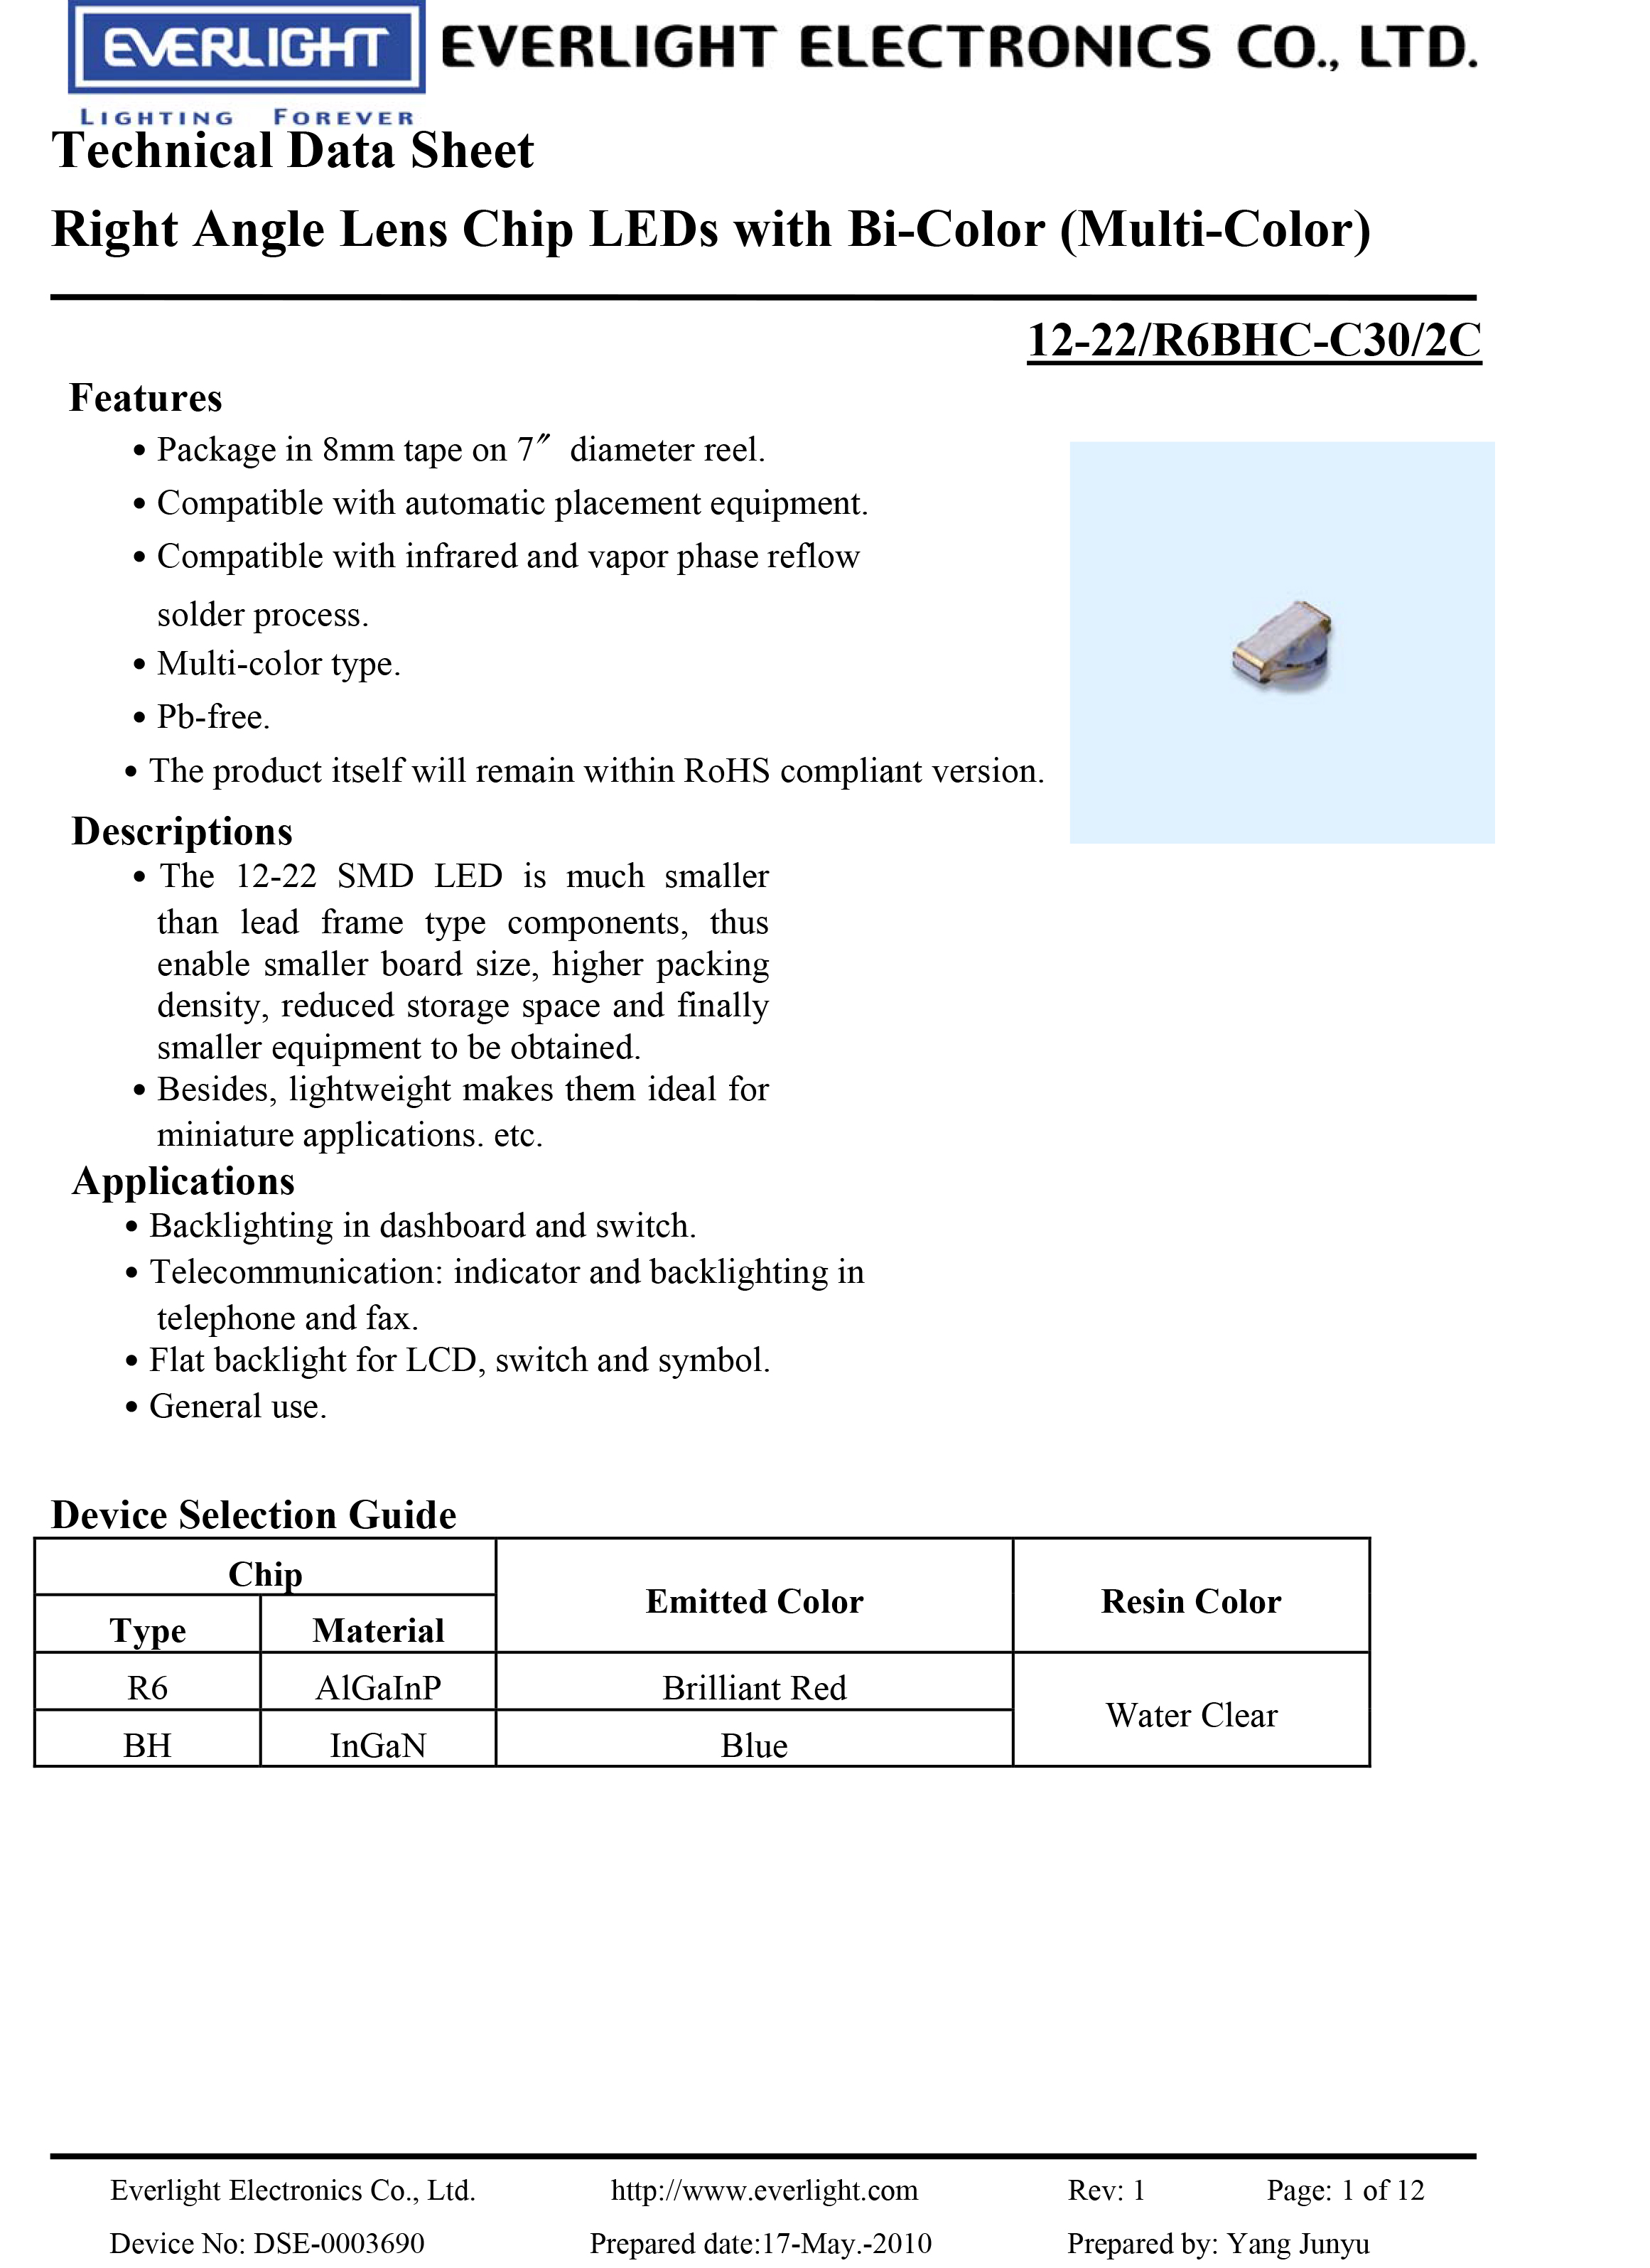 everlight led smd12-22-R6BHC-C30-2C